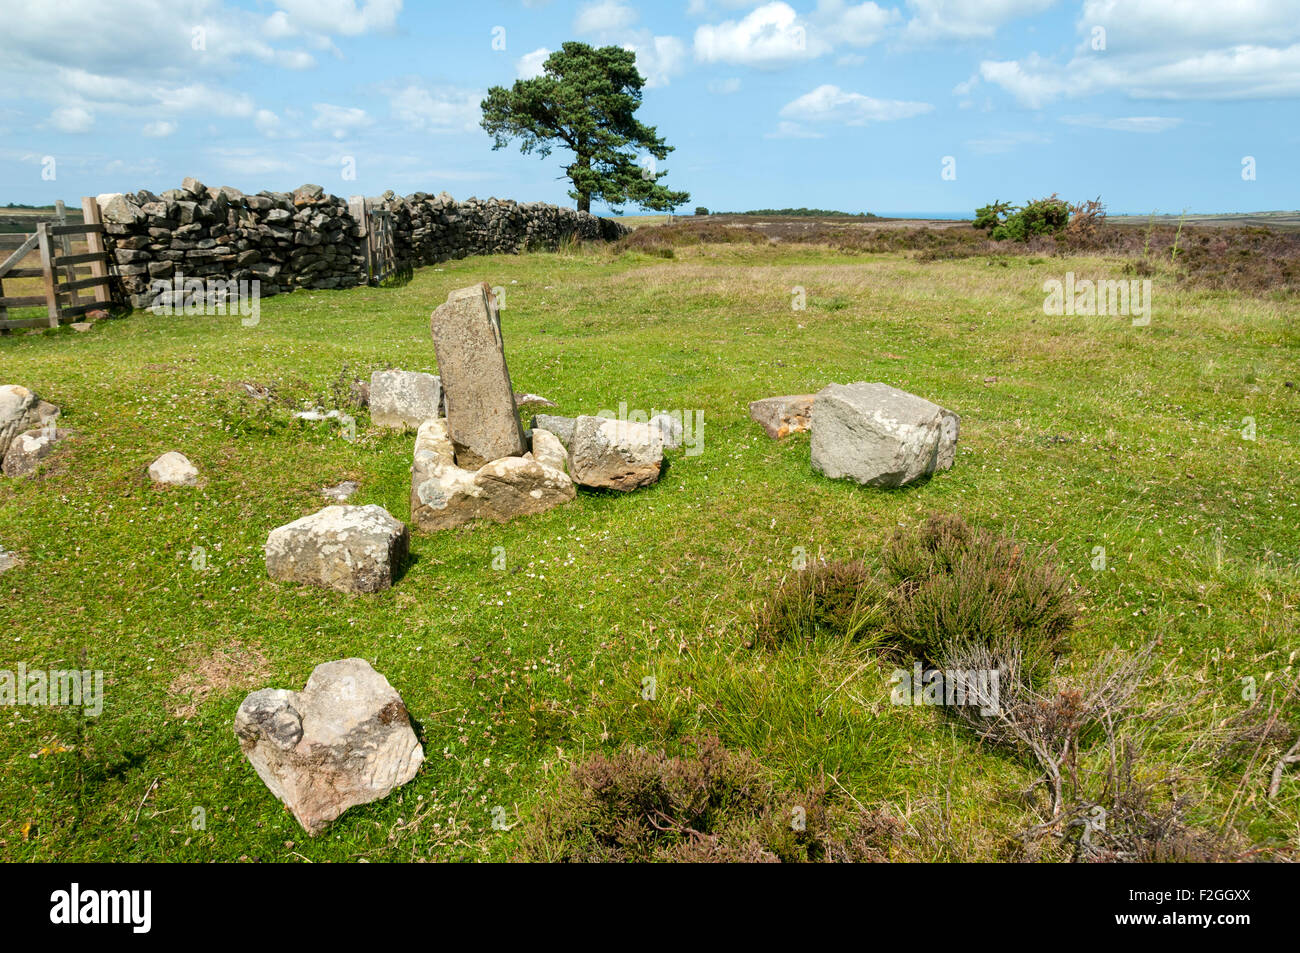 Die Überreste von John Cross, schießen Haus Rigg, Raketenstarts Moor, North Yorkshire Moors, Yorkshire, England, UK Stockfoto